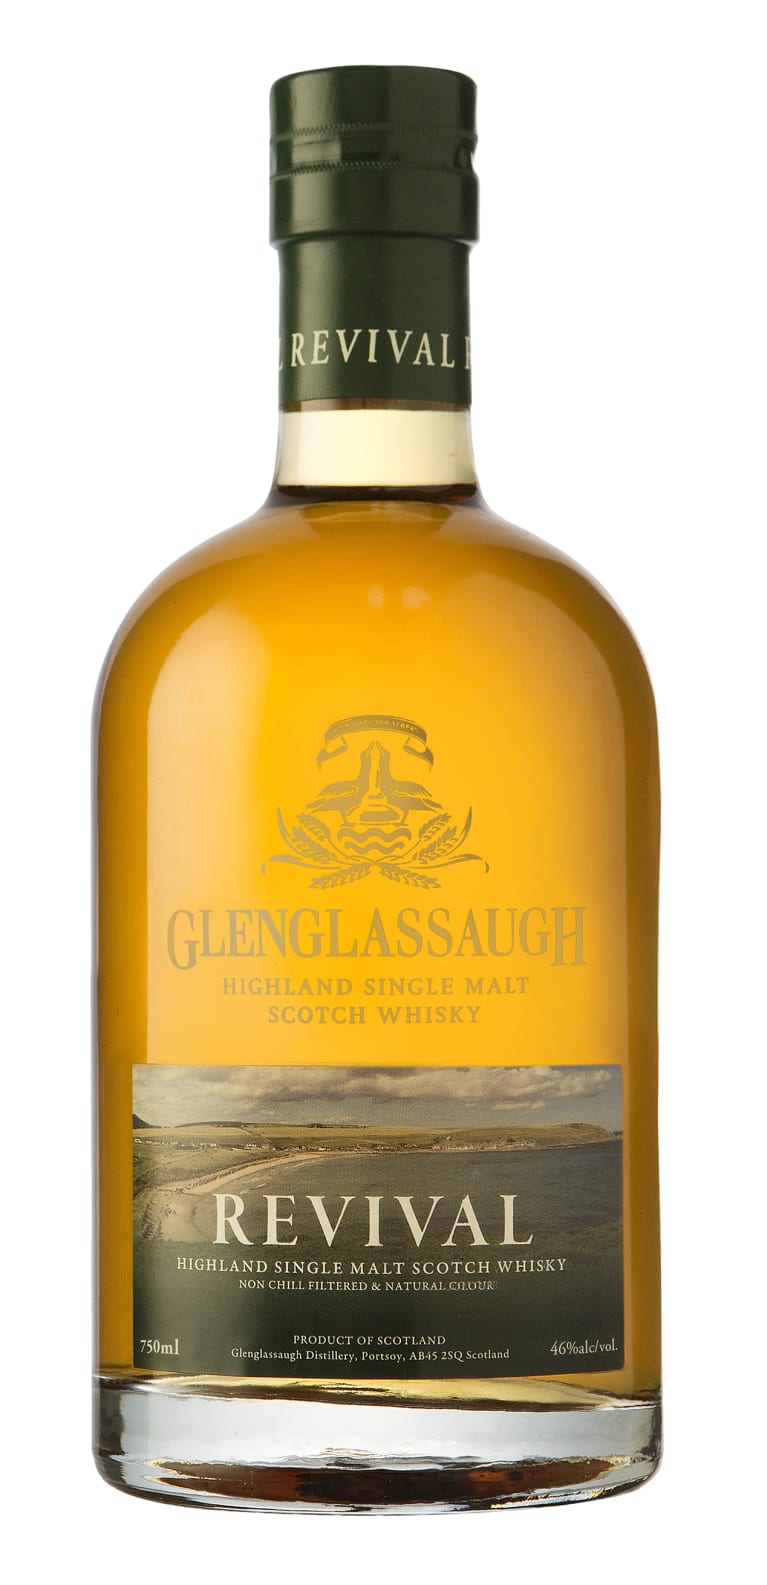 Glenglassaugh Distillery Sandend Single Malt 750ml $73 - Uncle